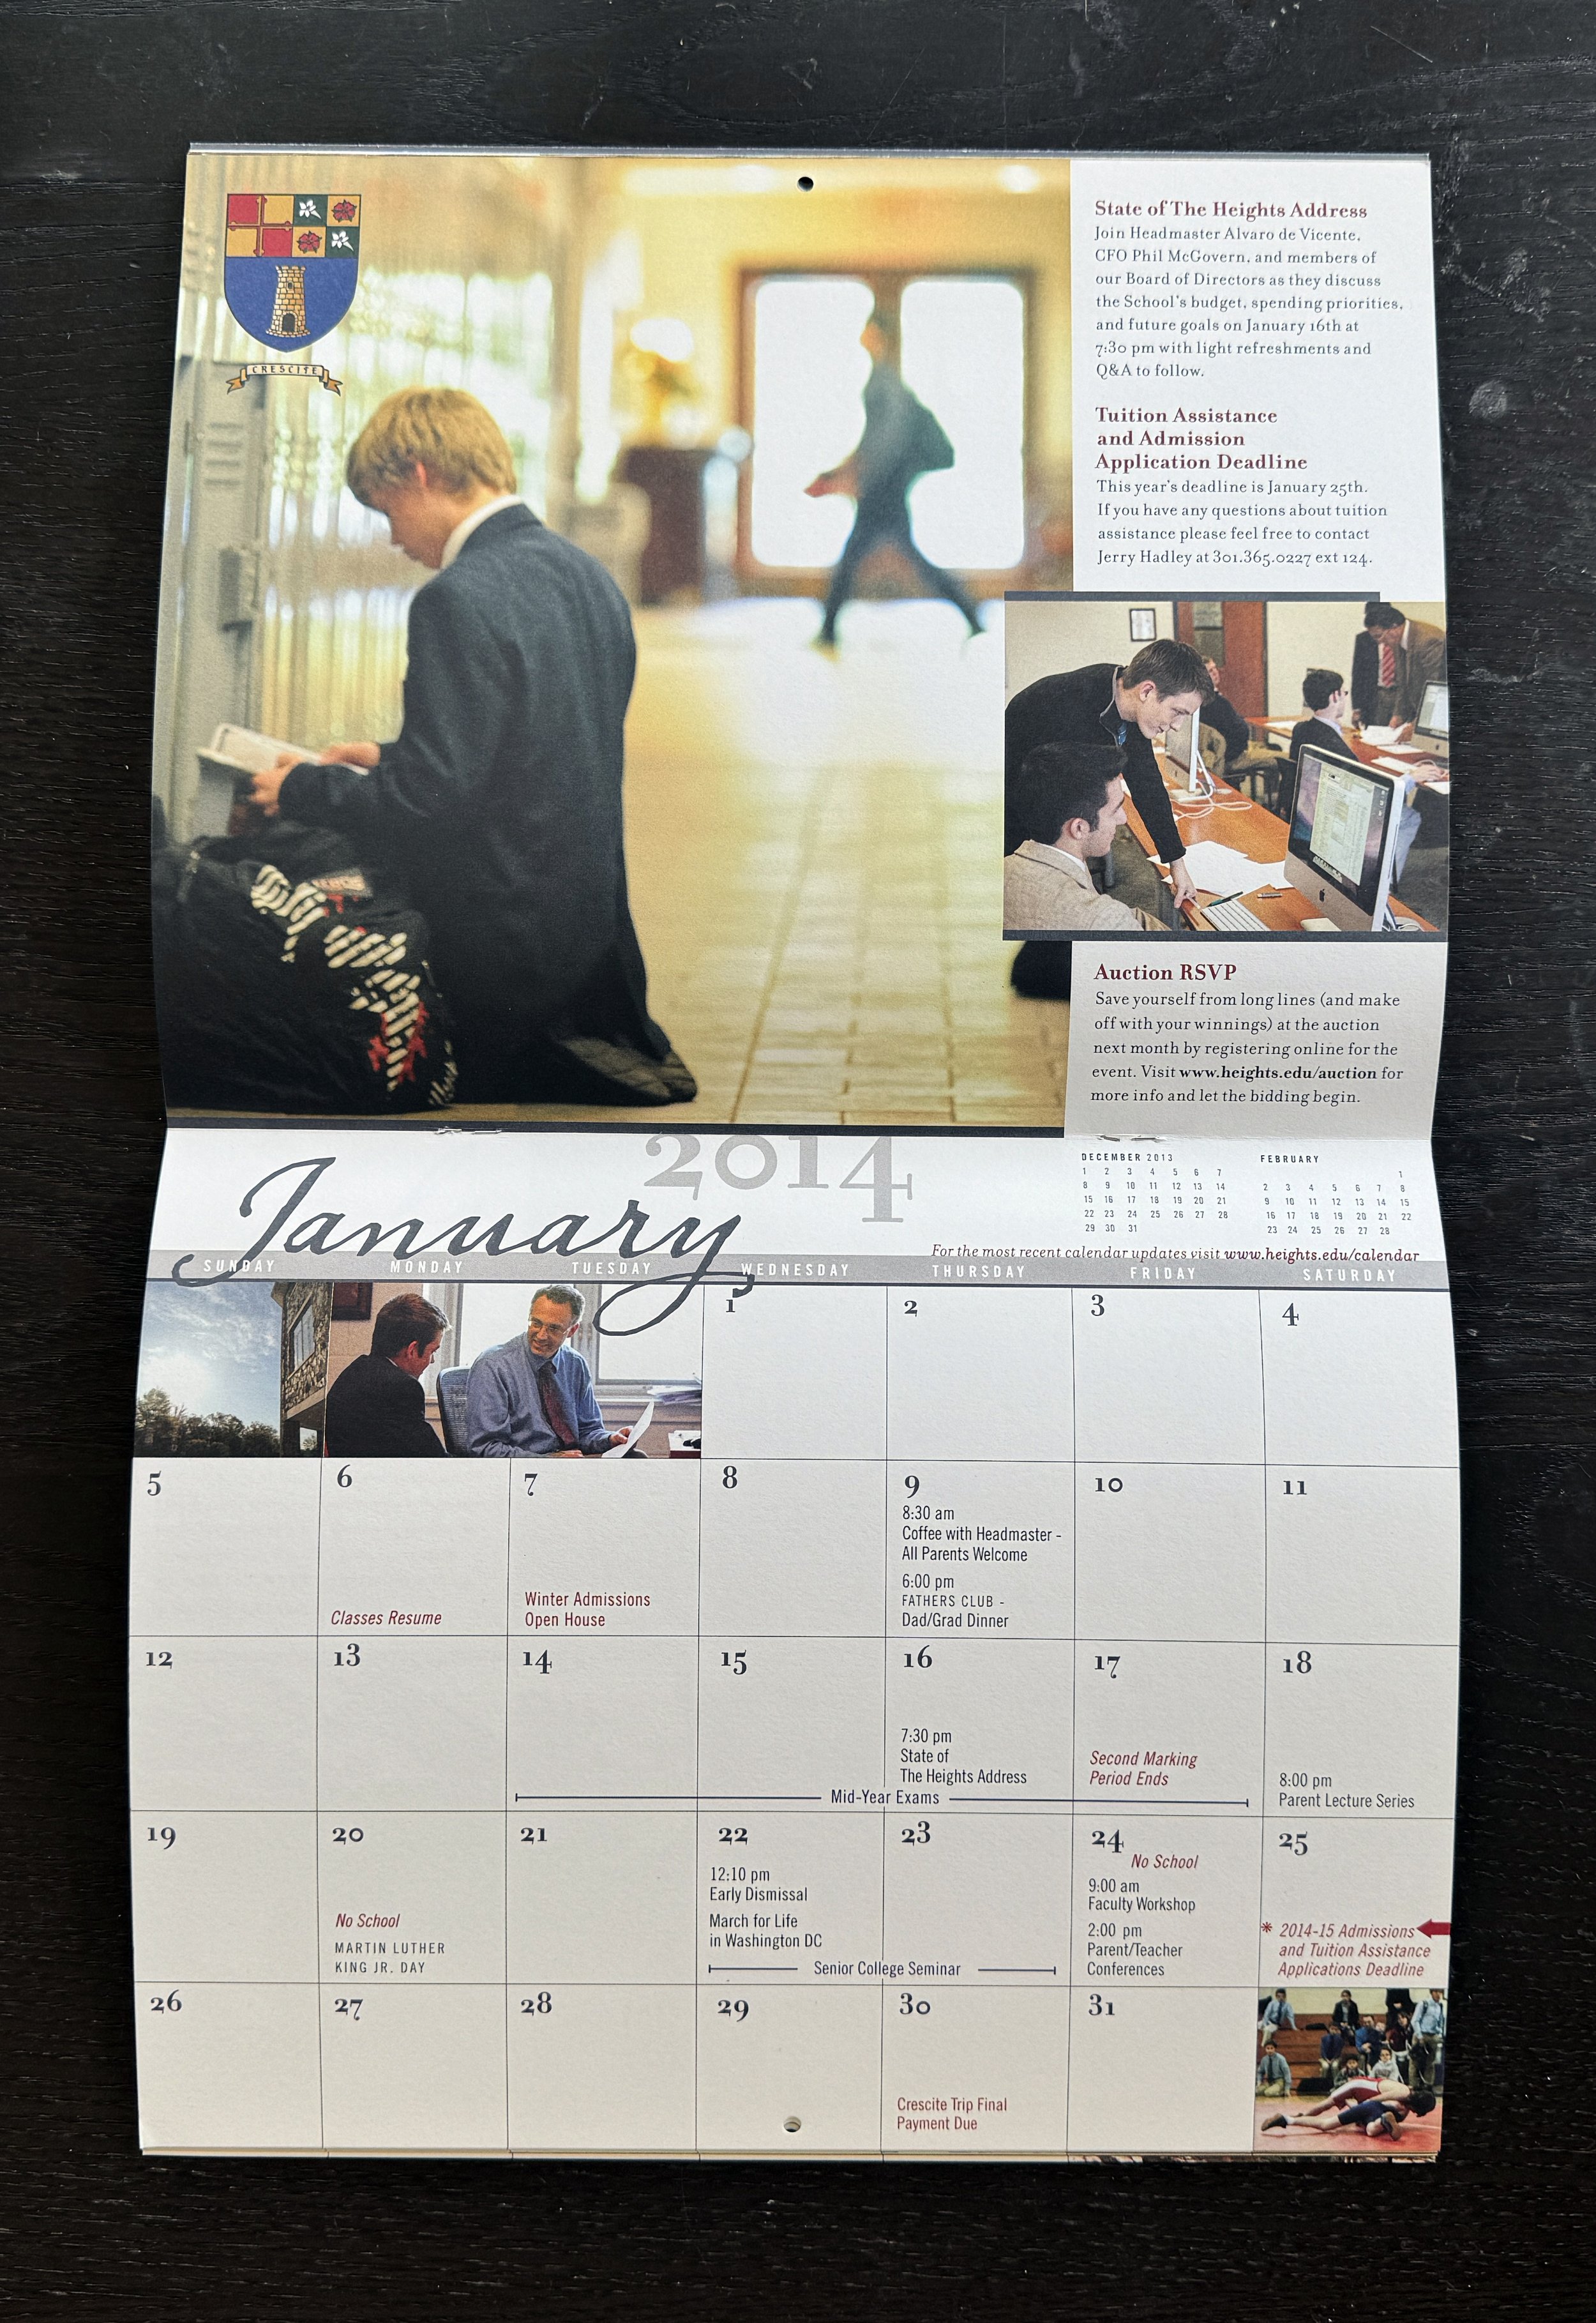 Calendar_The Heights_2014 Interior Spread.JPG